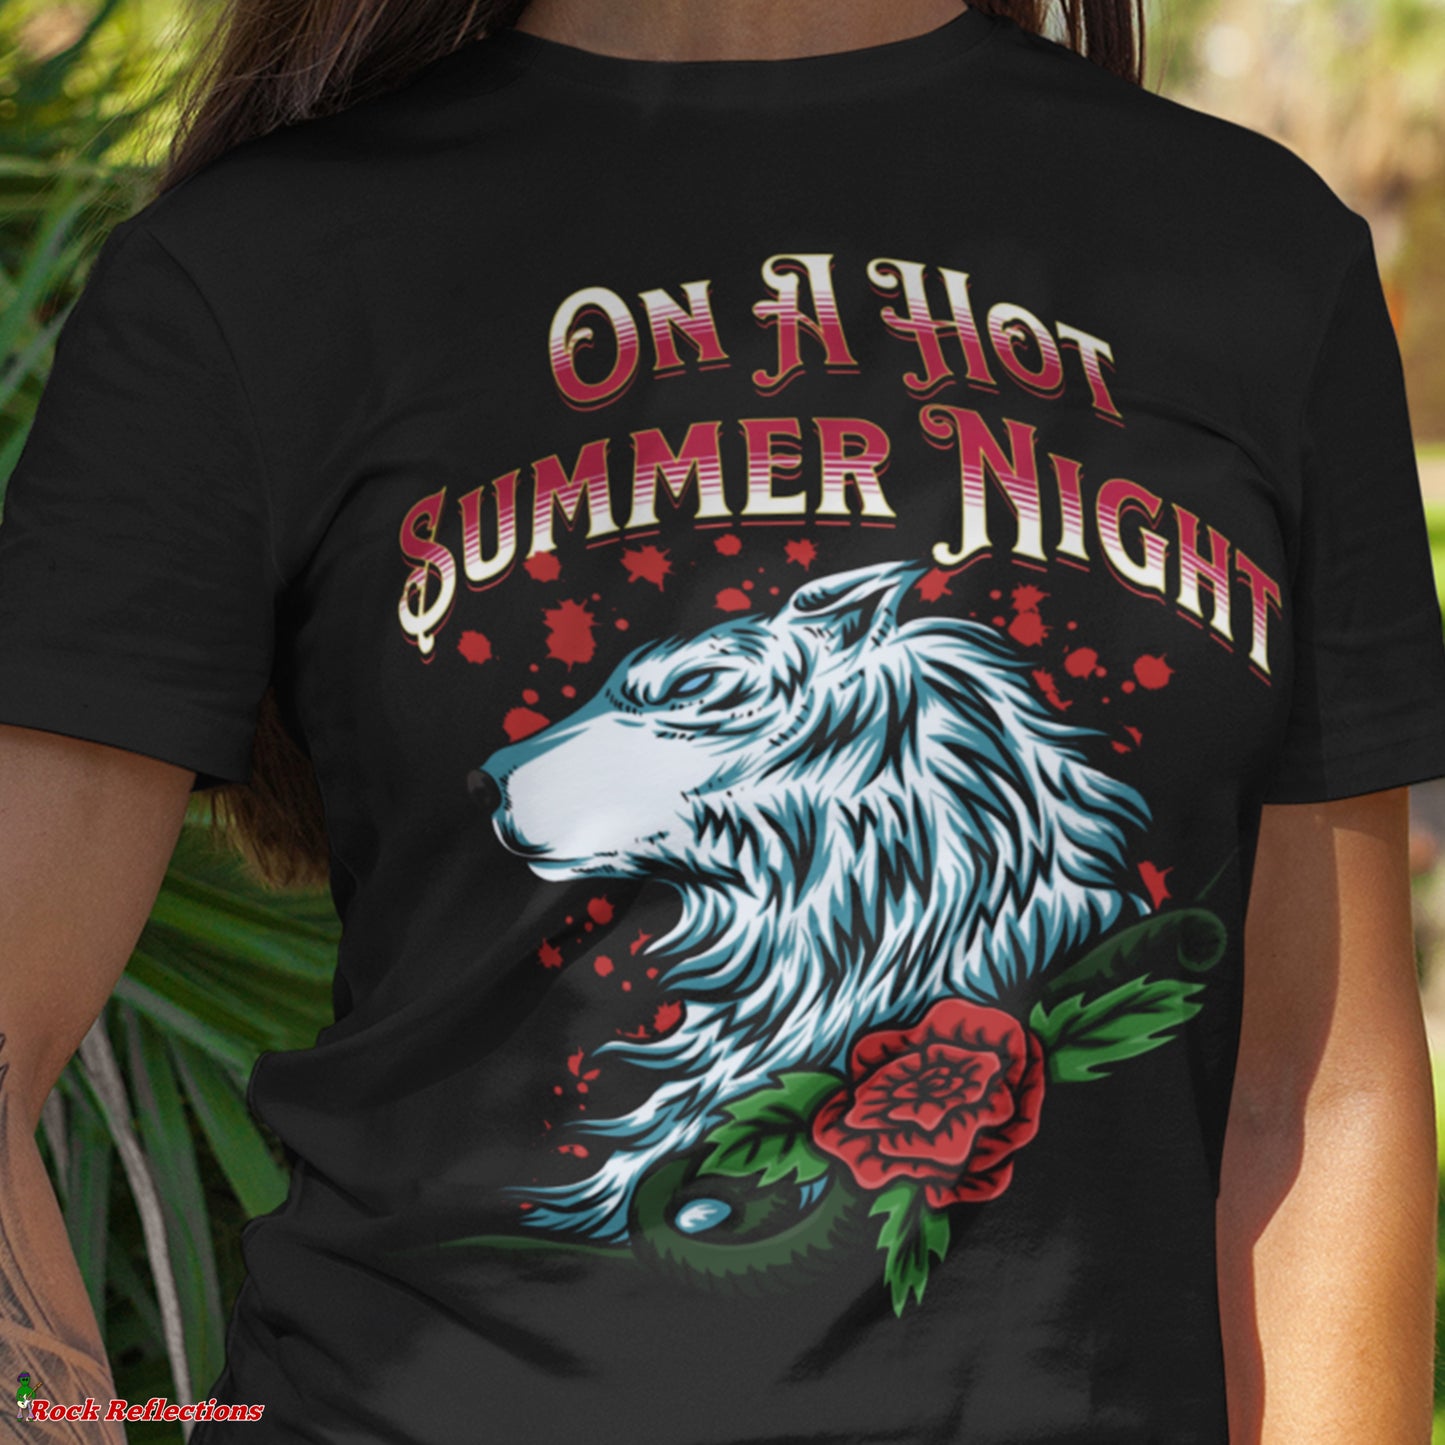 Hot Summer Night T-Shirt SPOD